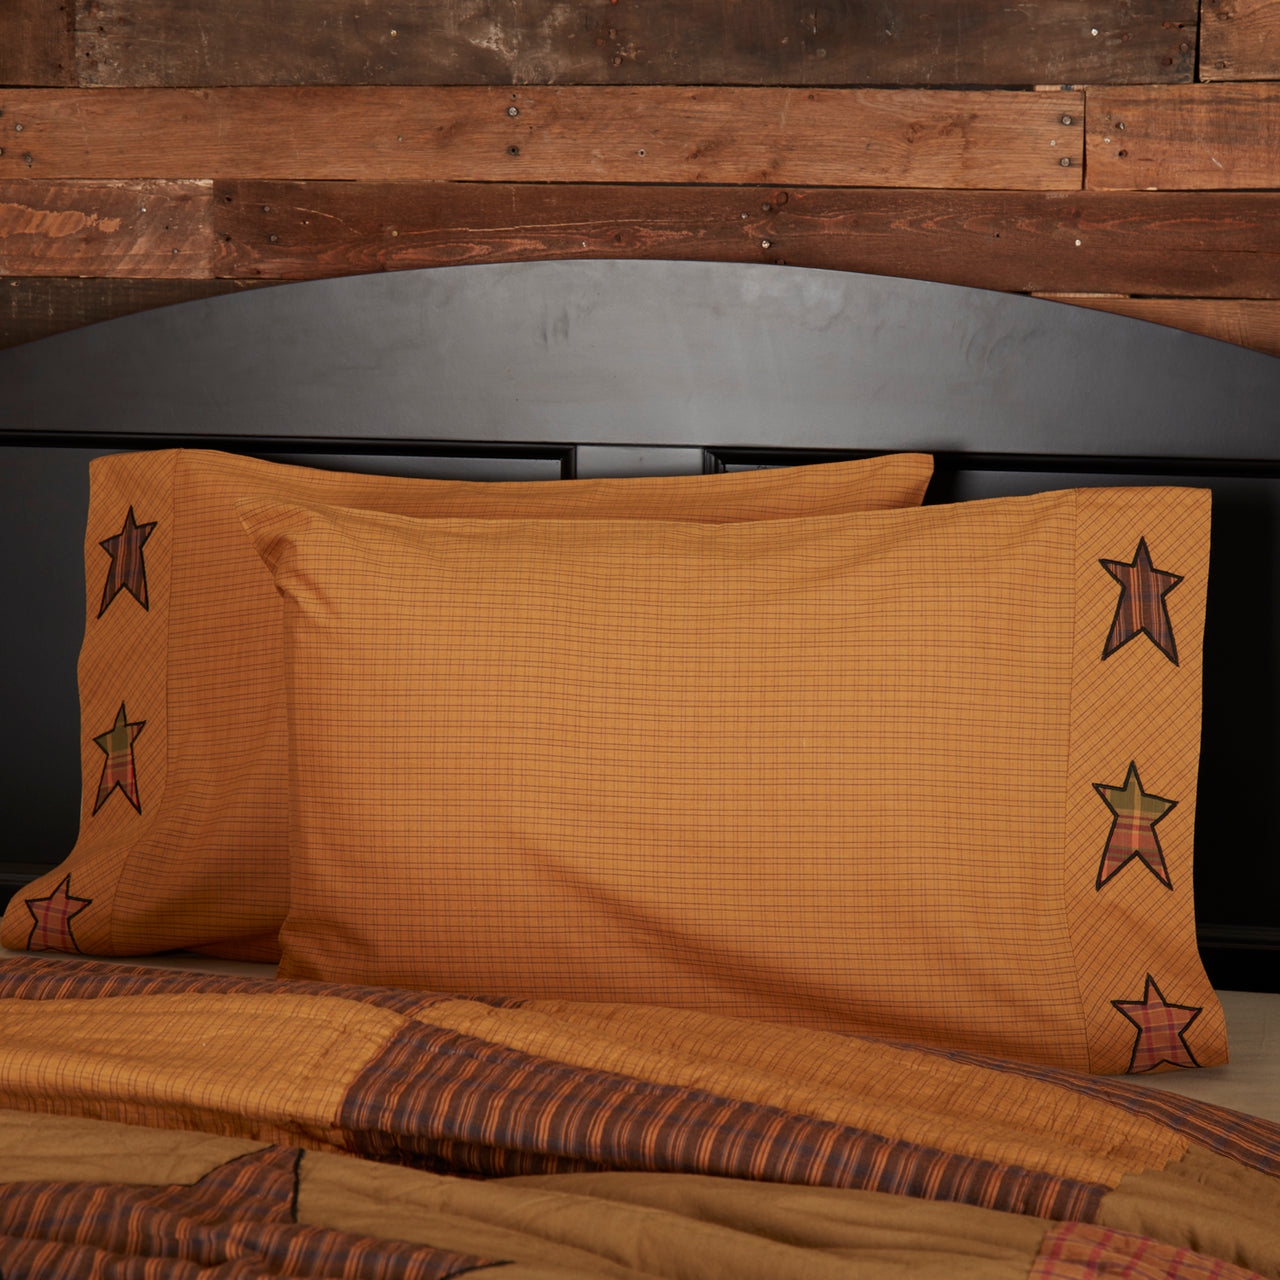 Stratton Standard Pillow Case w/Applique Star Set of 2 21x30 VHC Brands